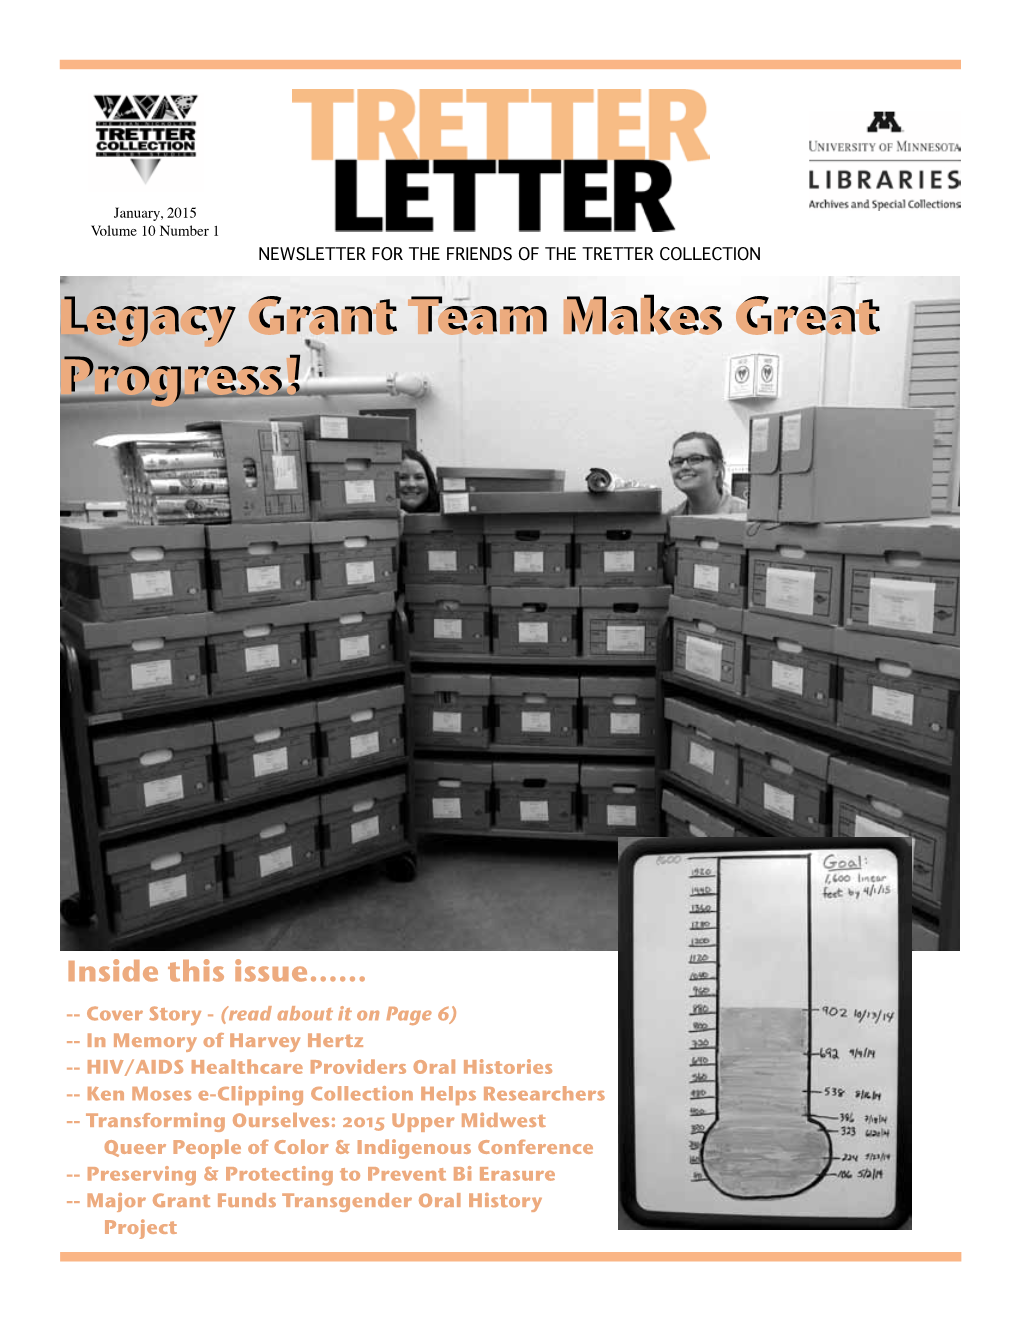 Legacy Grant Team Makes Great Progress!